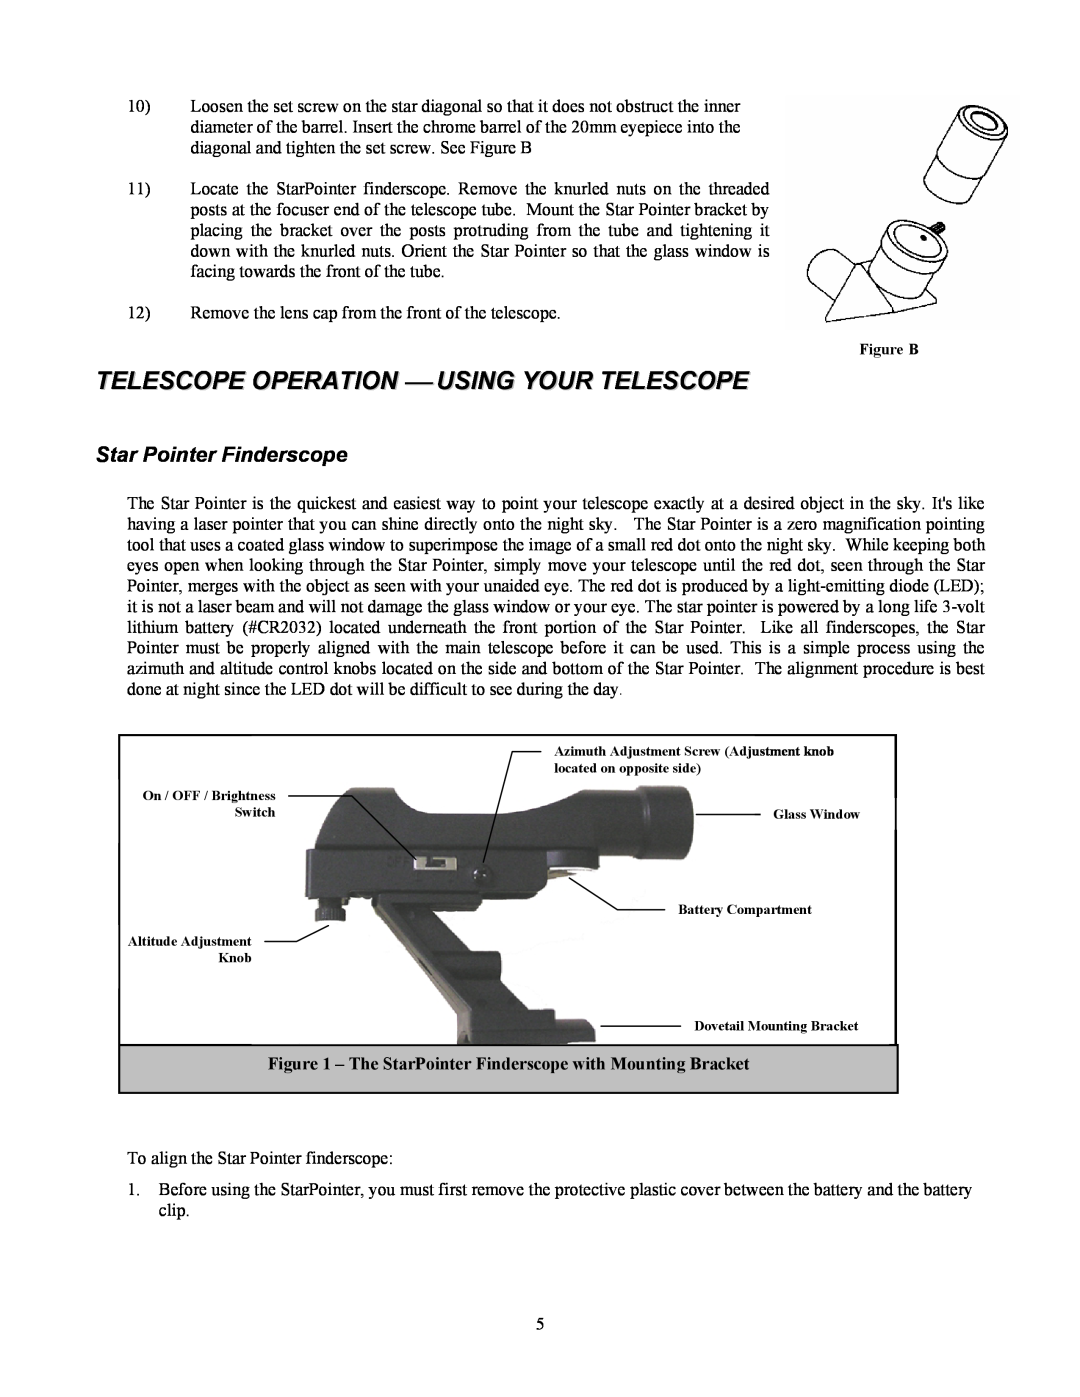 Celestron 70 manual Telescope Operation  Using Your Telescope, Star Pointer Finderscope 